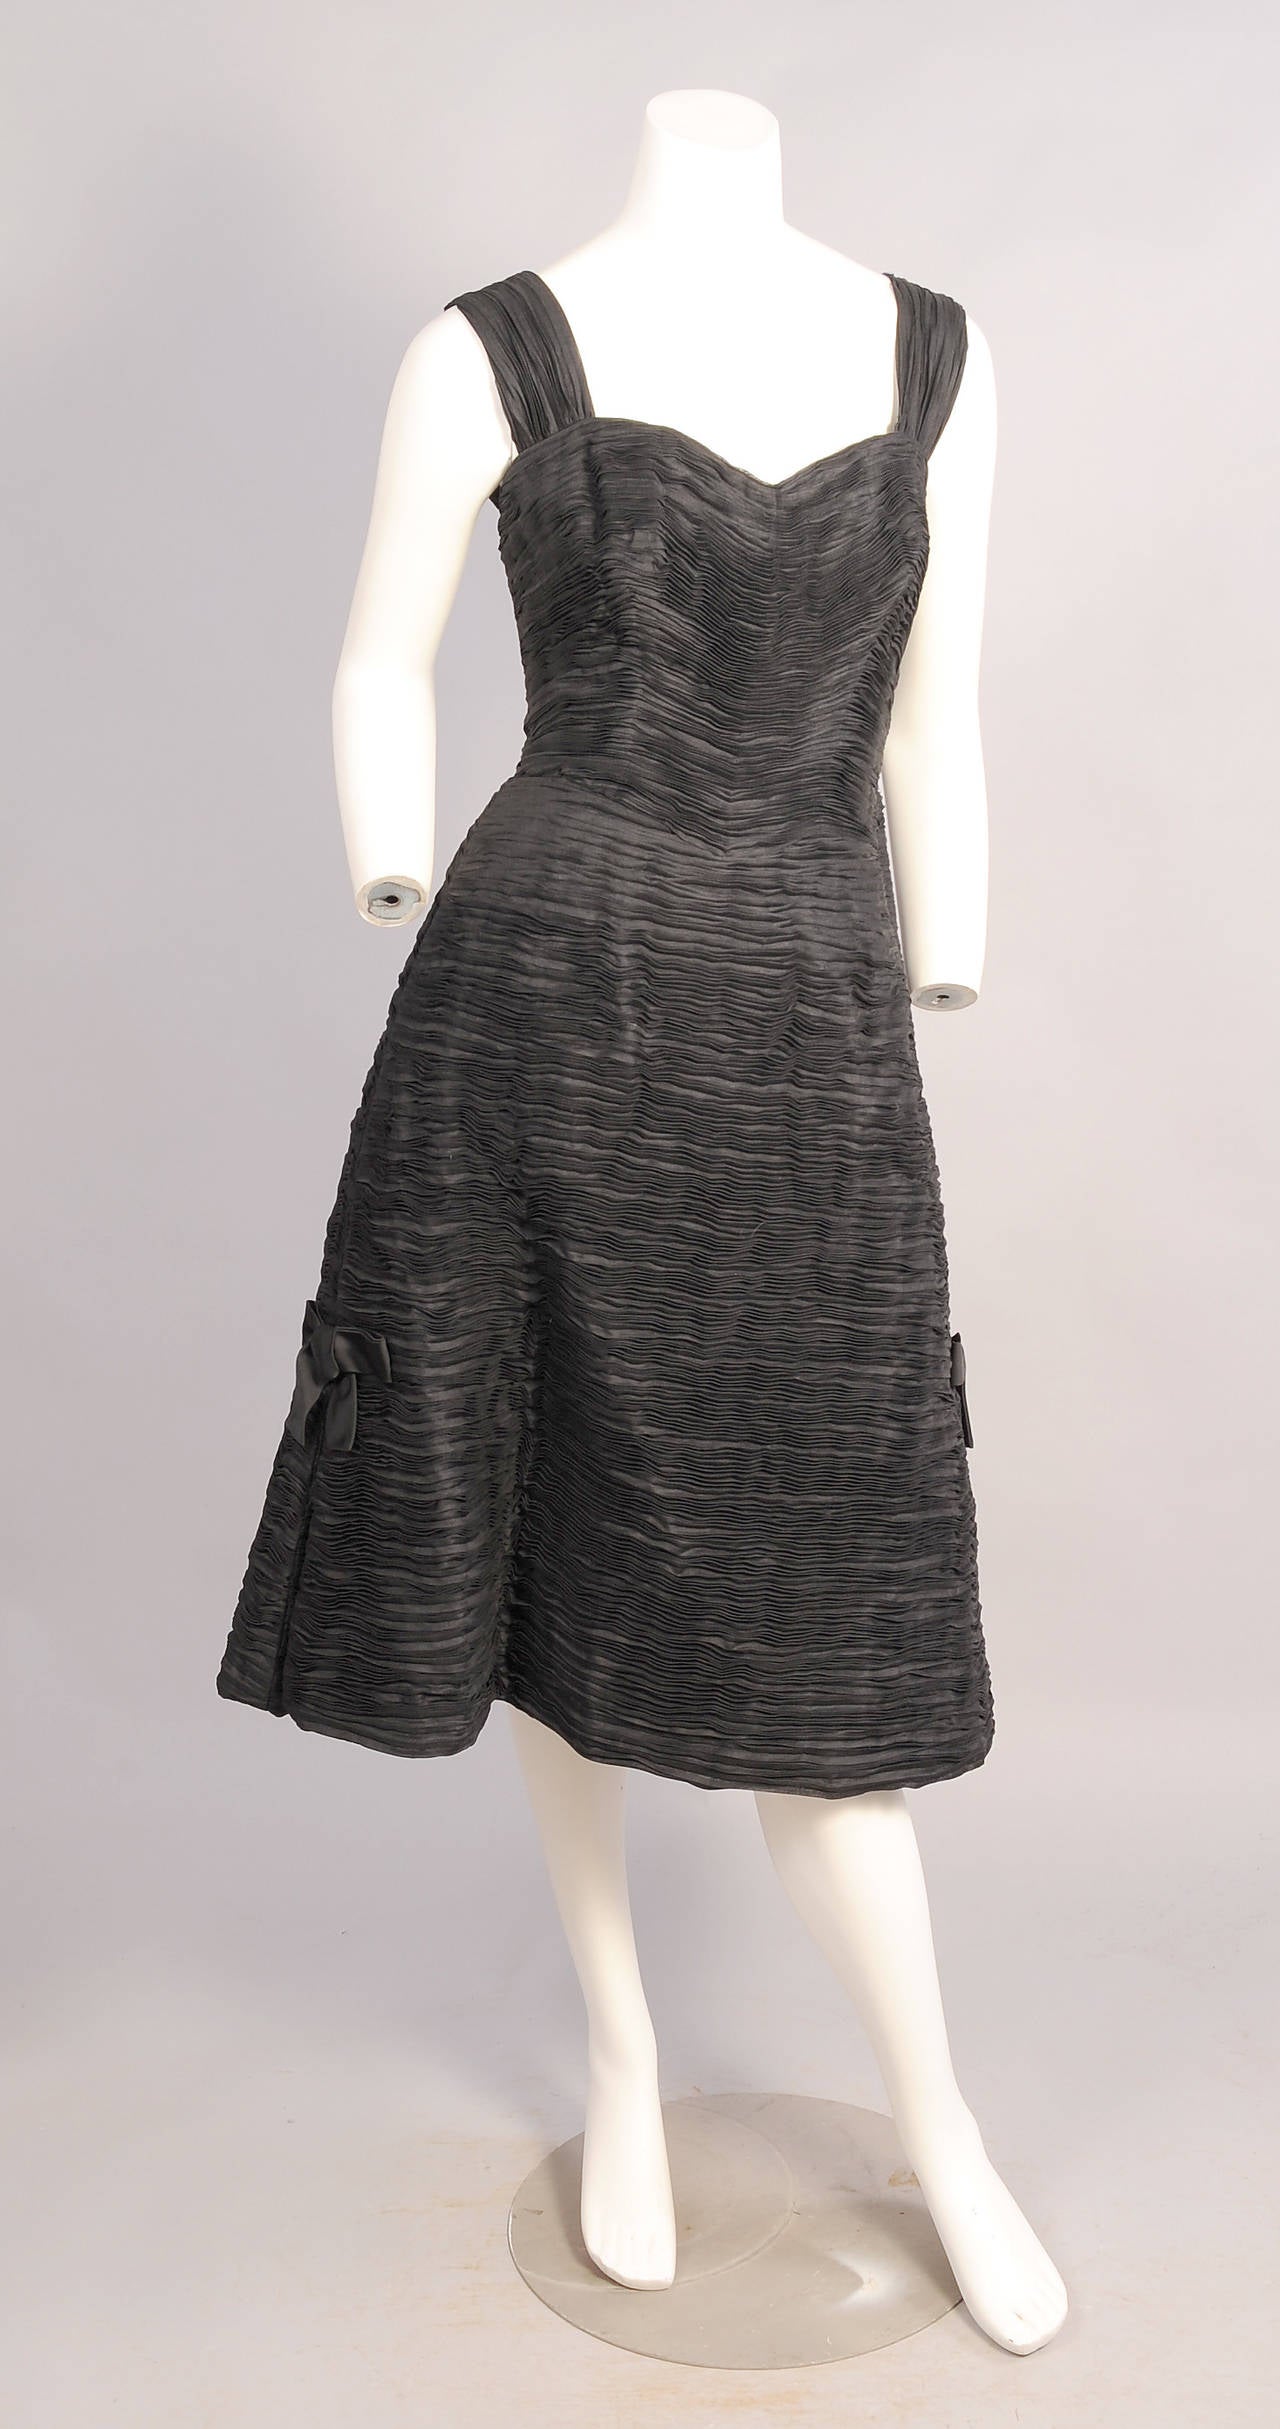 sybil connolly dress for sale